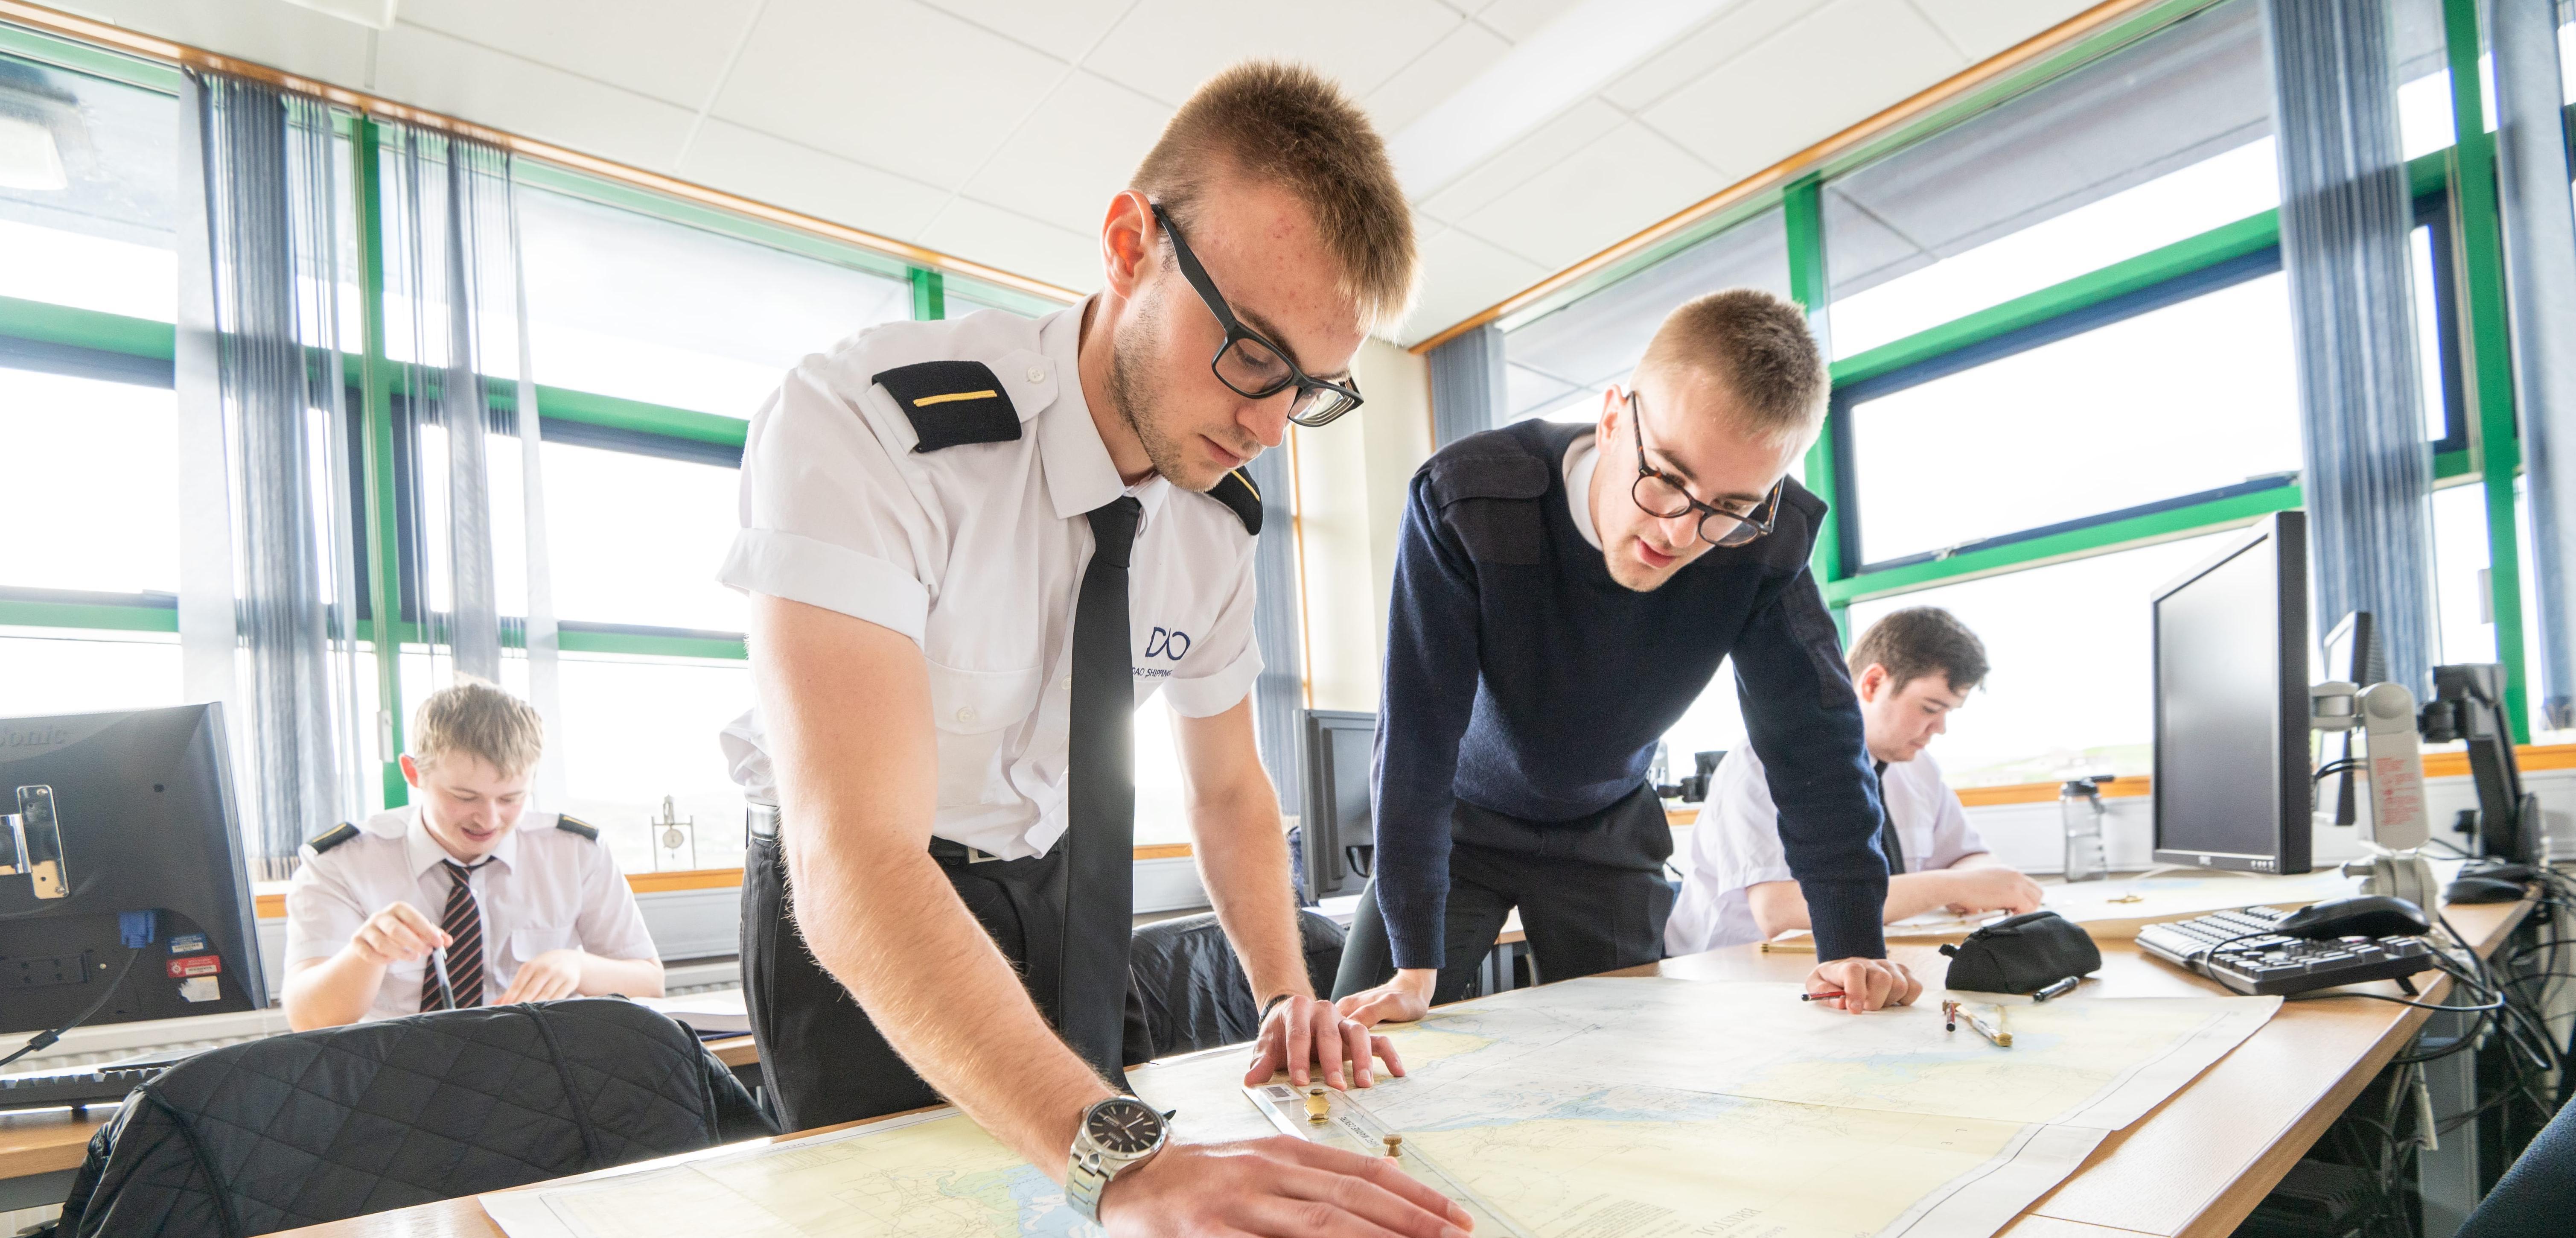 Merchant navy cadets looking at a sea chart